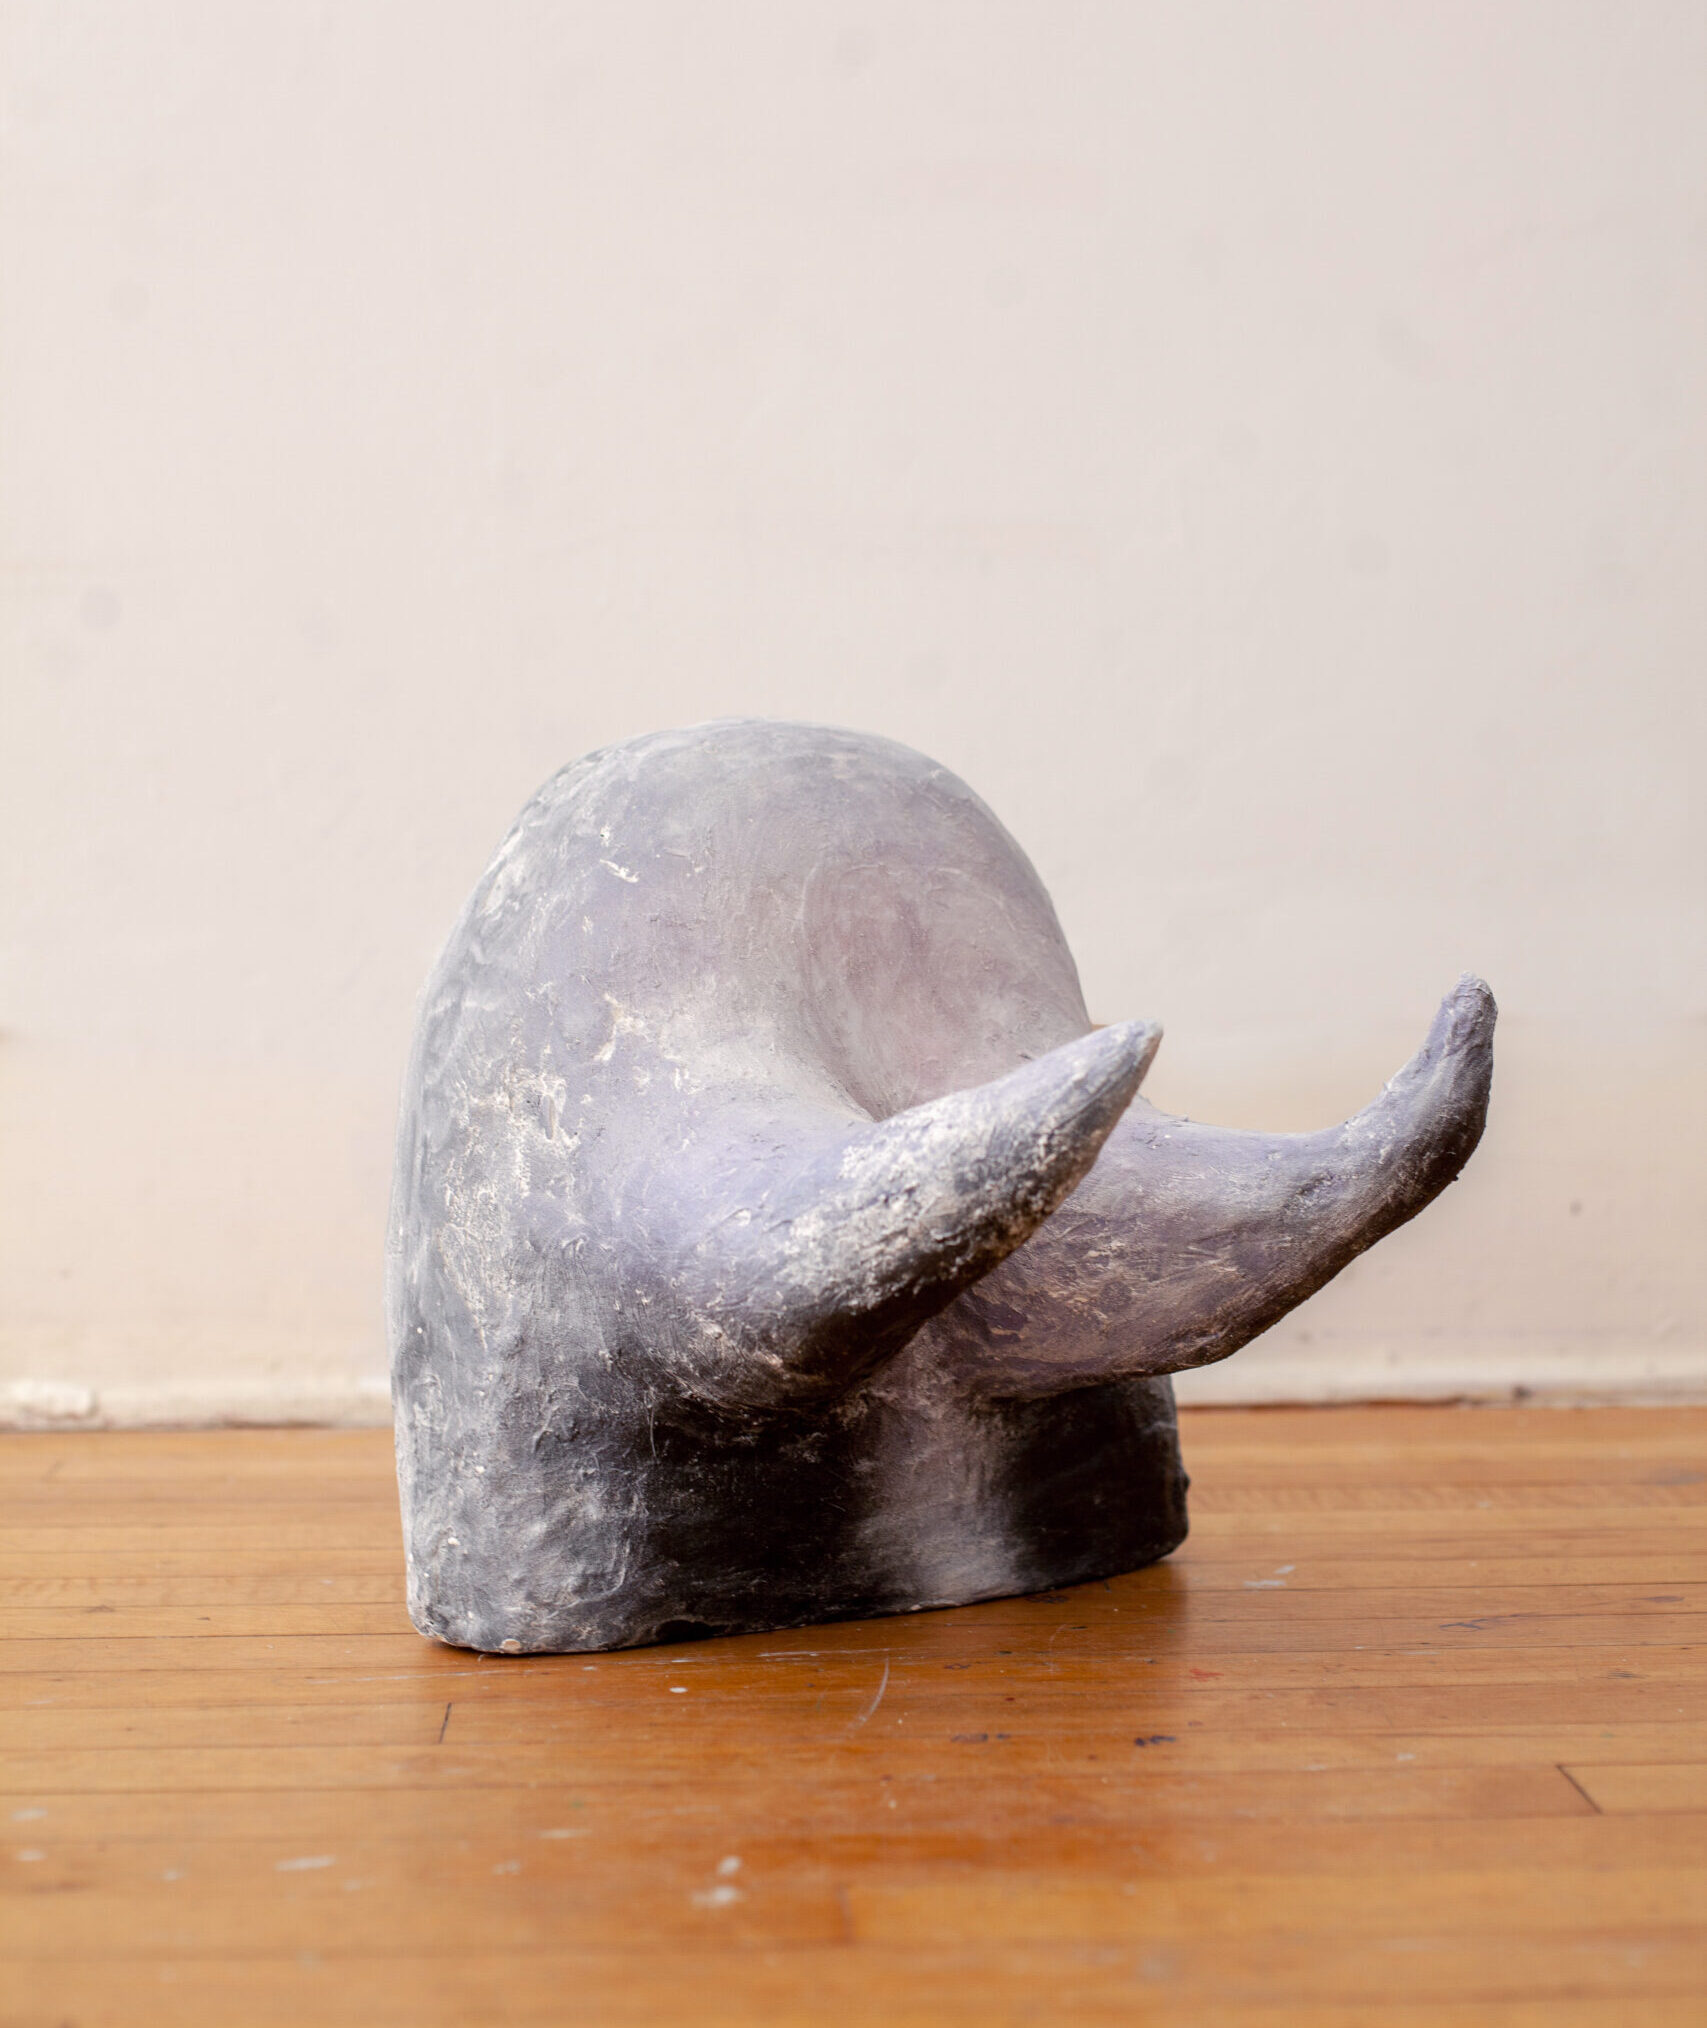 Plaster sculpture titled Horned Rock by artist Carrie Ruddick.